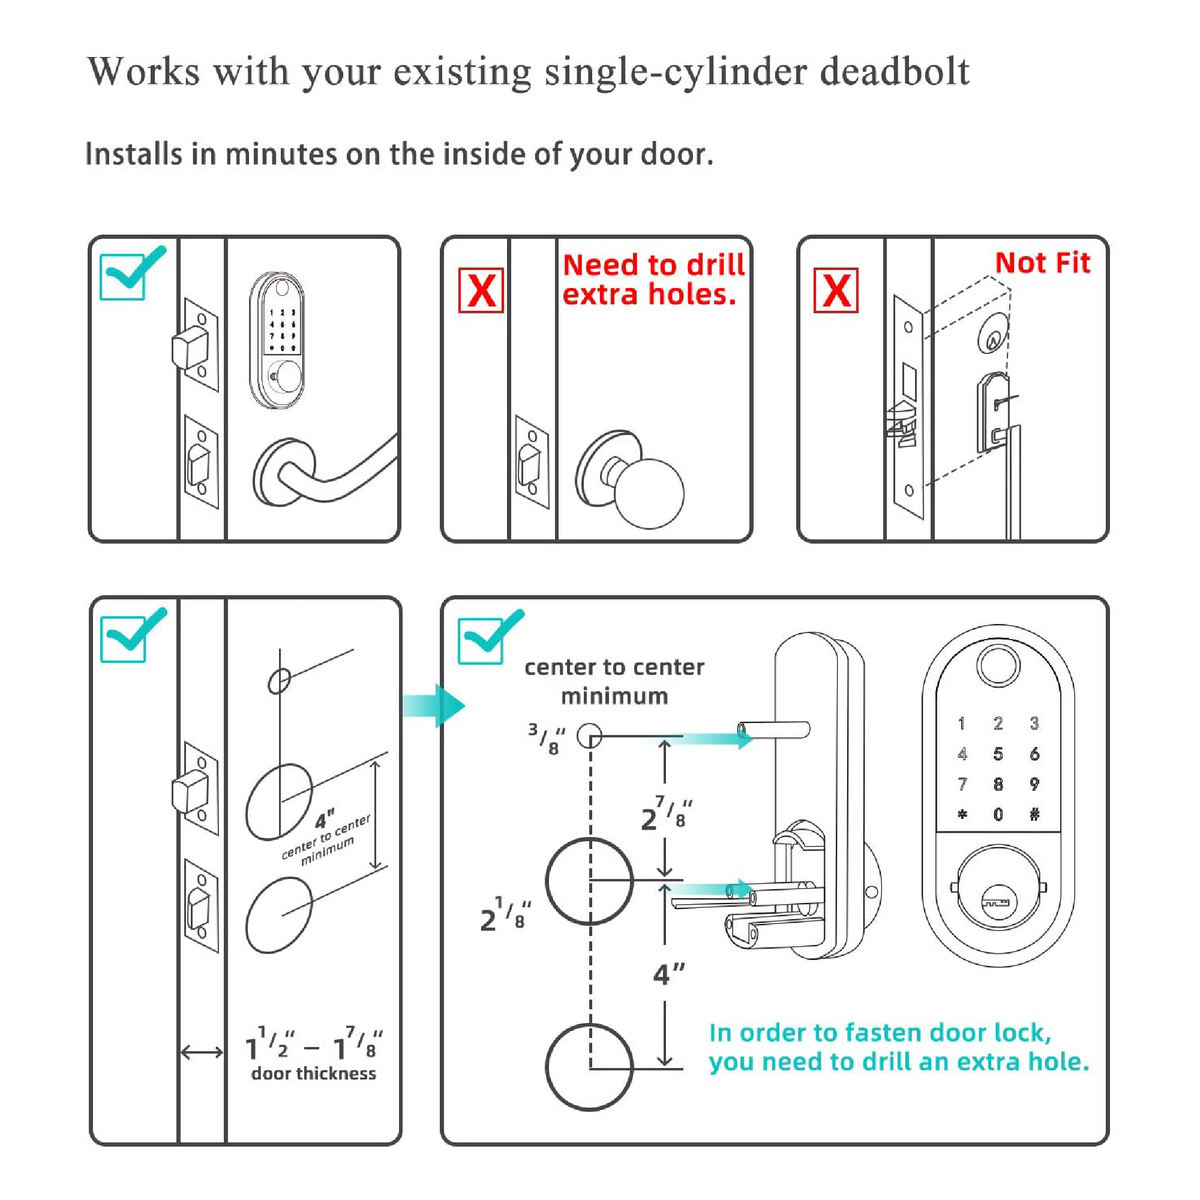 Smonet Fingerprint Electronic Deadbolt Door Lock with Keypad Y001-GLD